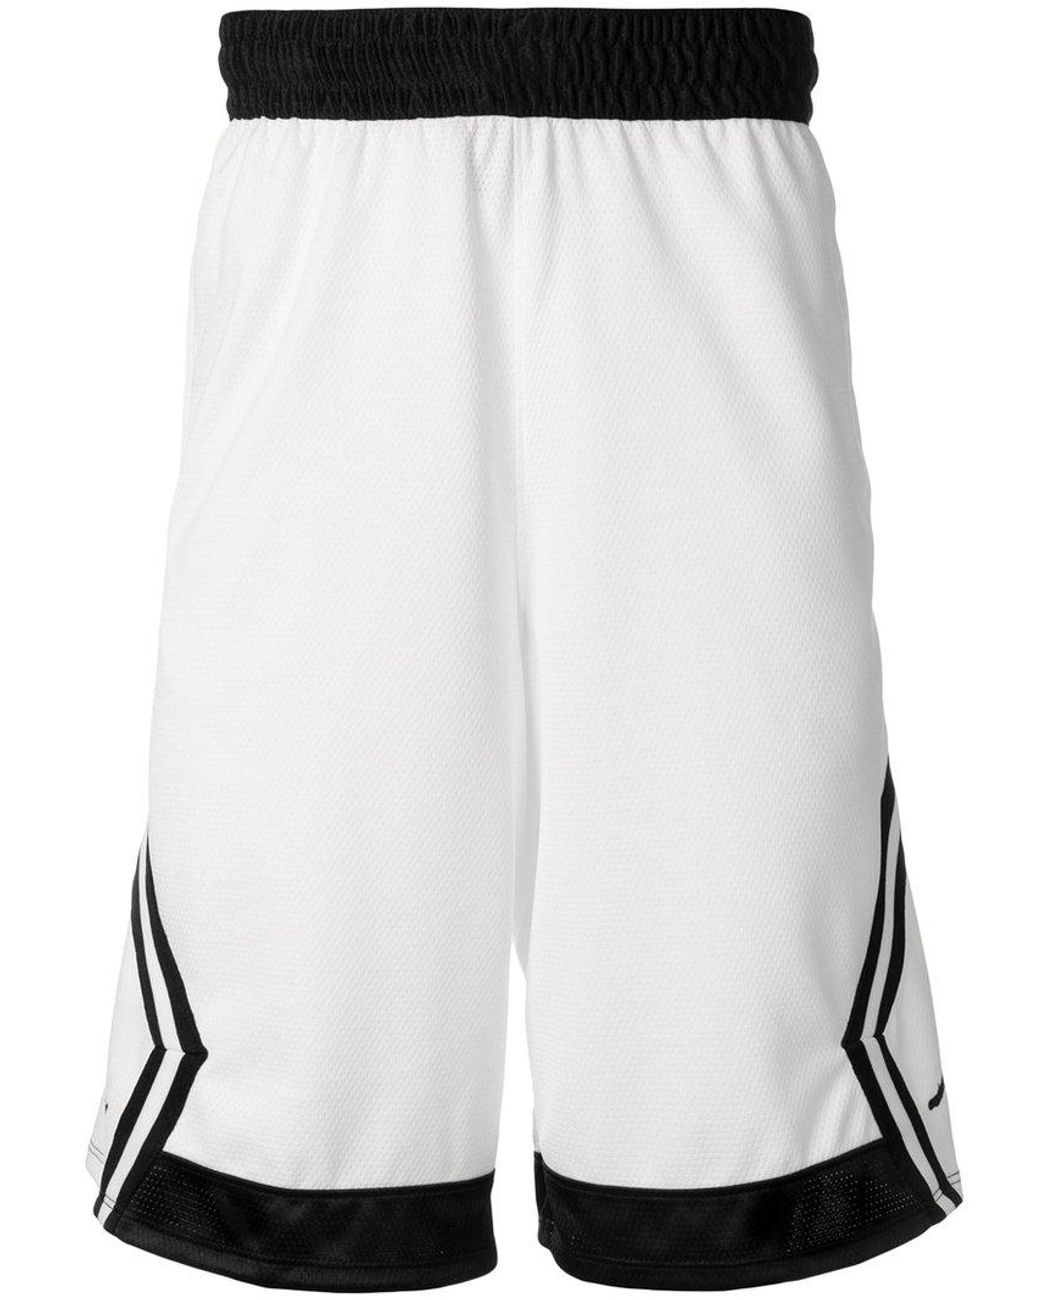 Pantalones cortos Jordan Rise Diamond estilo baloncesto Nike de hombre de  color Blanco | Lyst